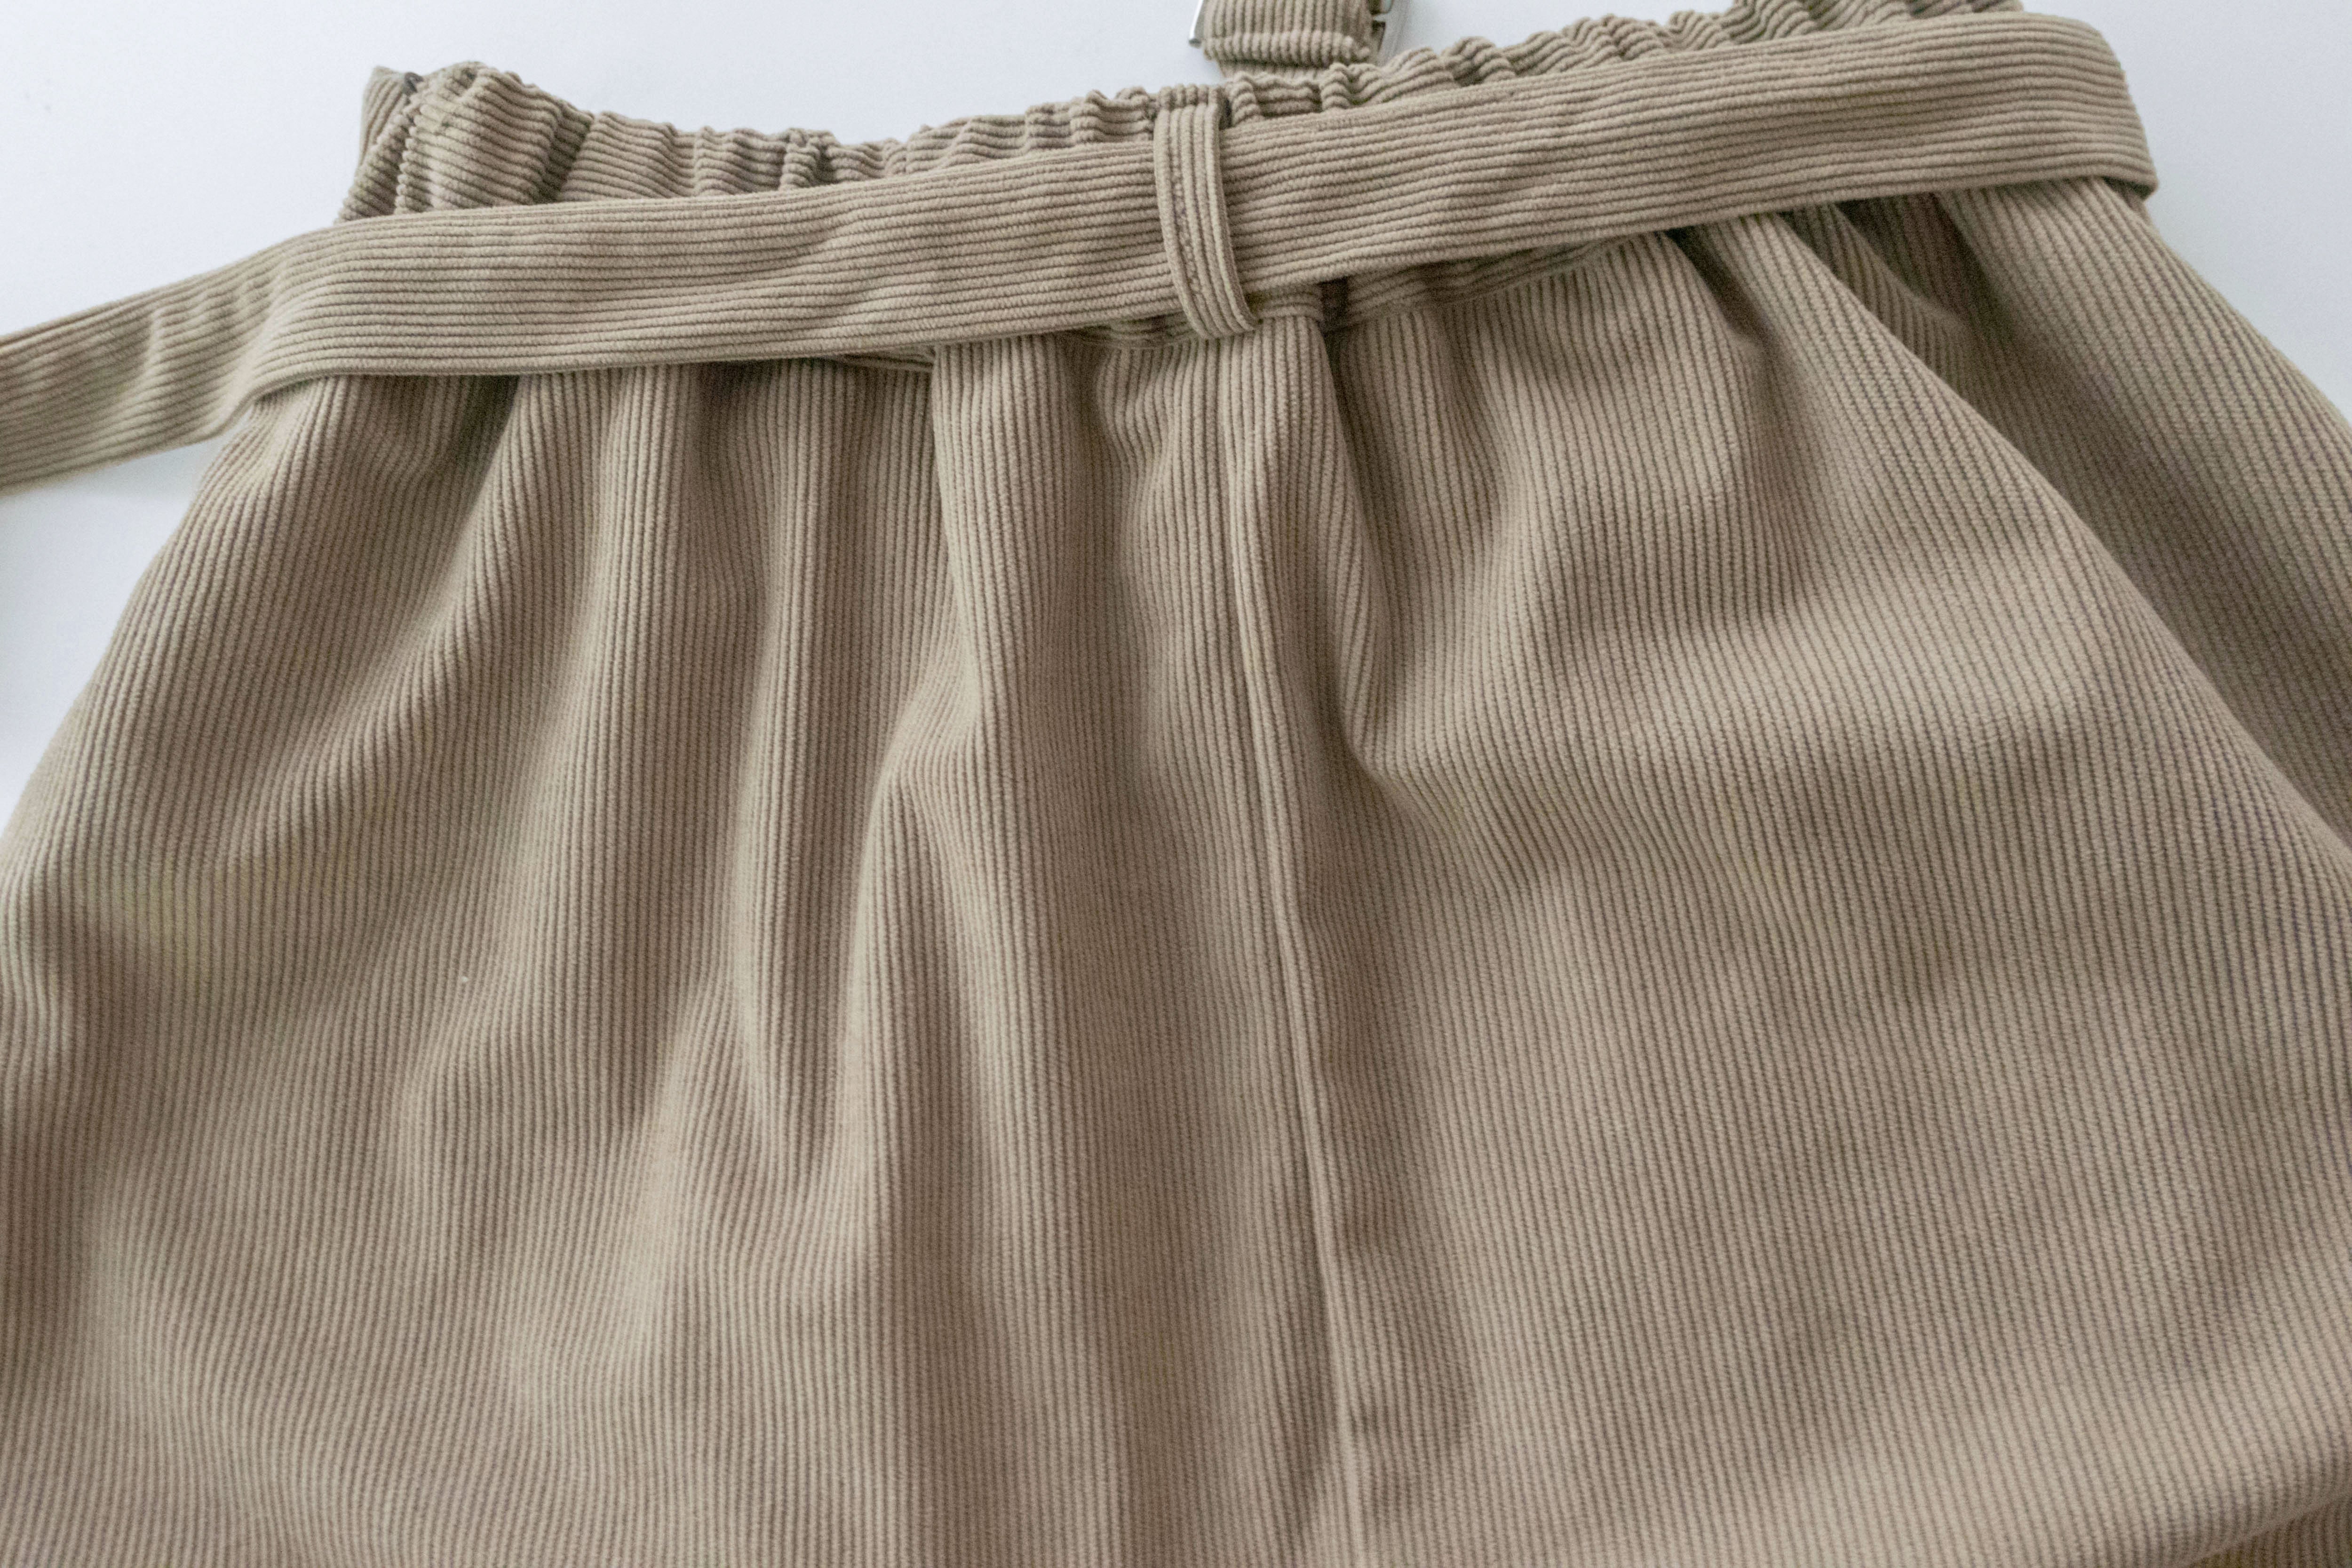 <<✈️𝔽𝔸𝕊𝕋 ℝ𝔼𝕊𝕋𝕆ℂ𝕂 best>>Olive 橄欖綠色腰帶後橡筋車褶傘裙, Skirt/ SK8770